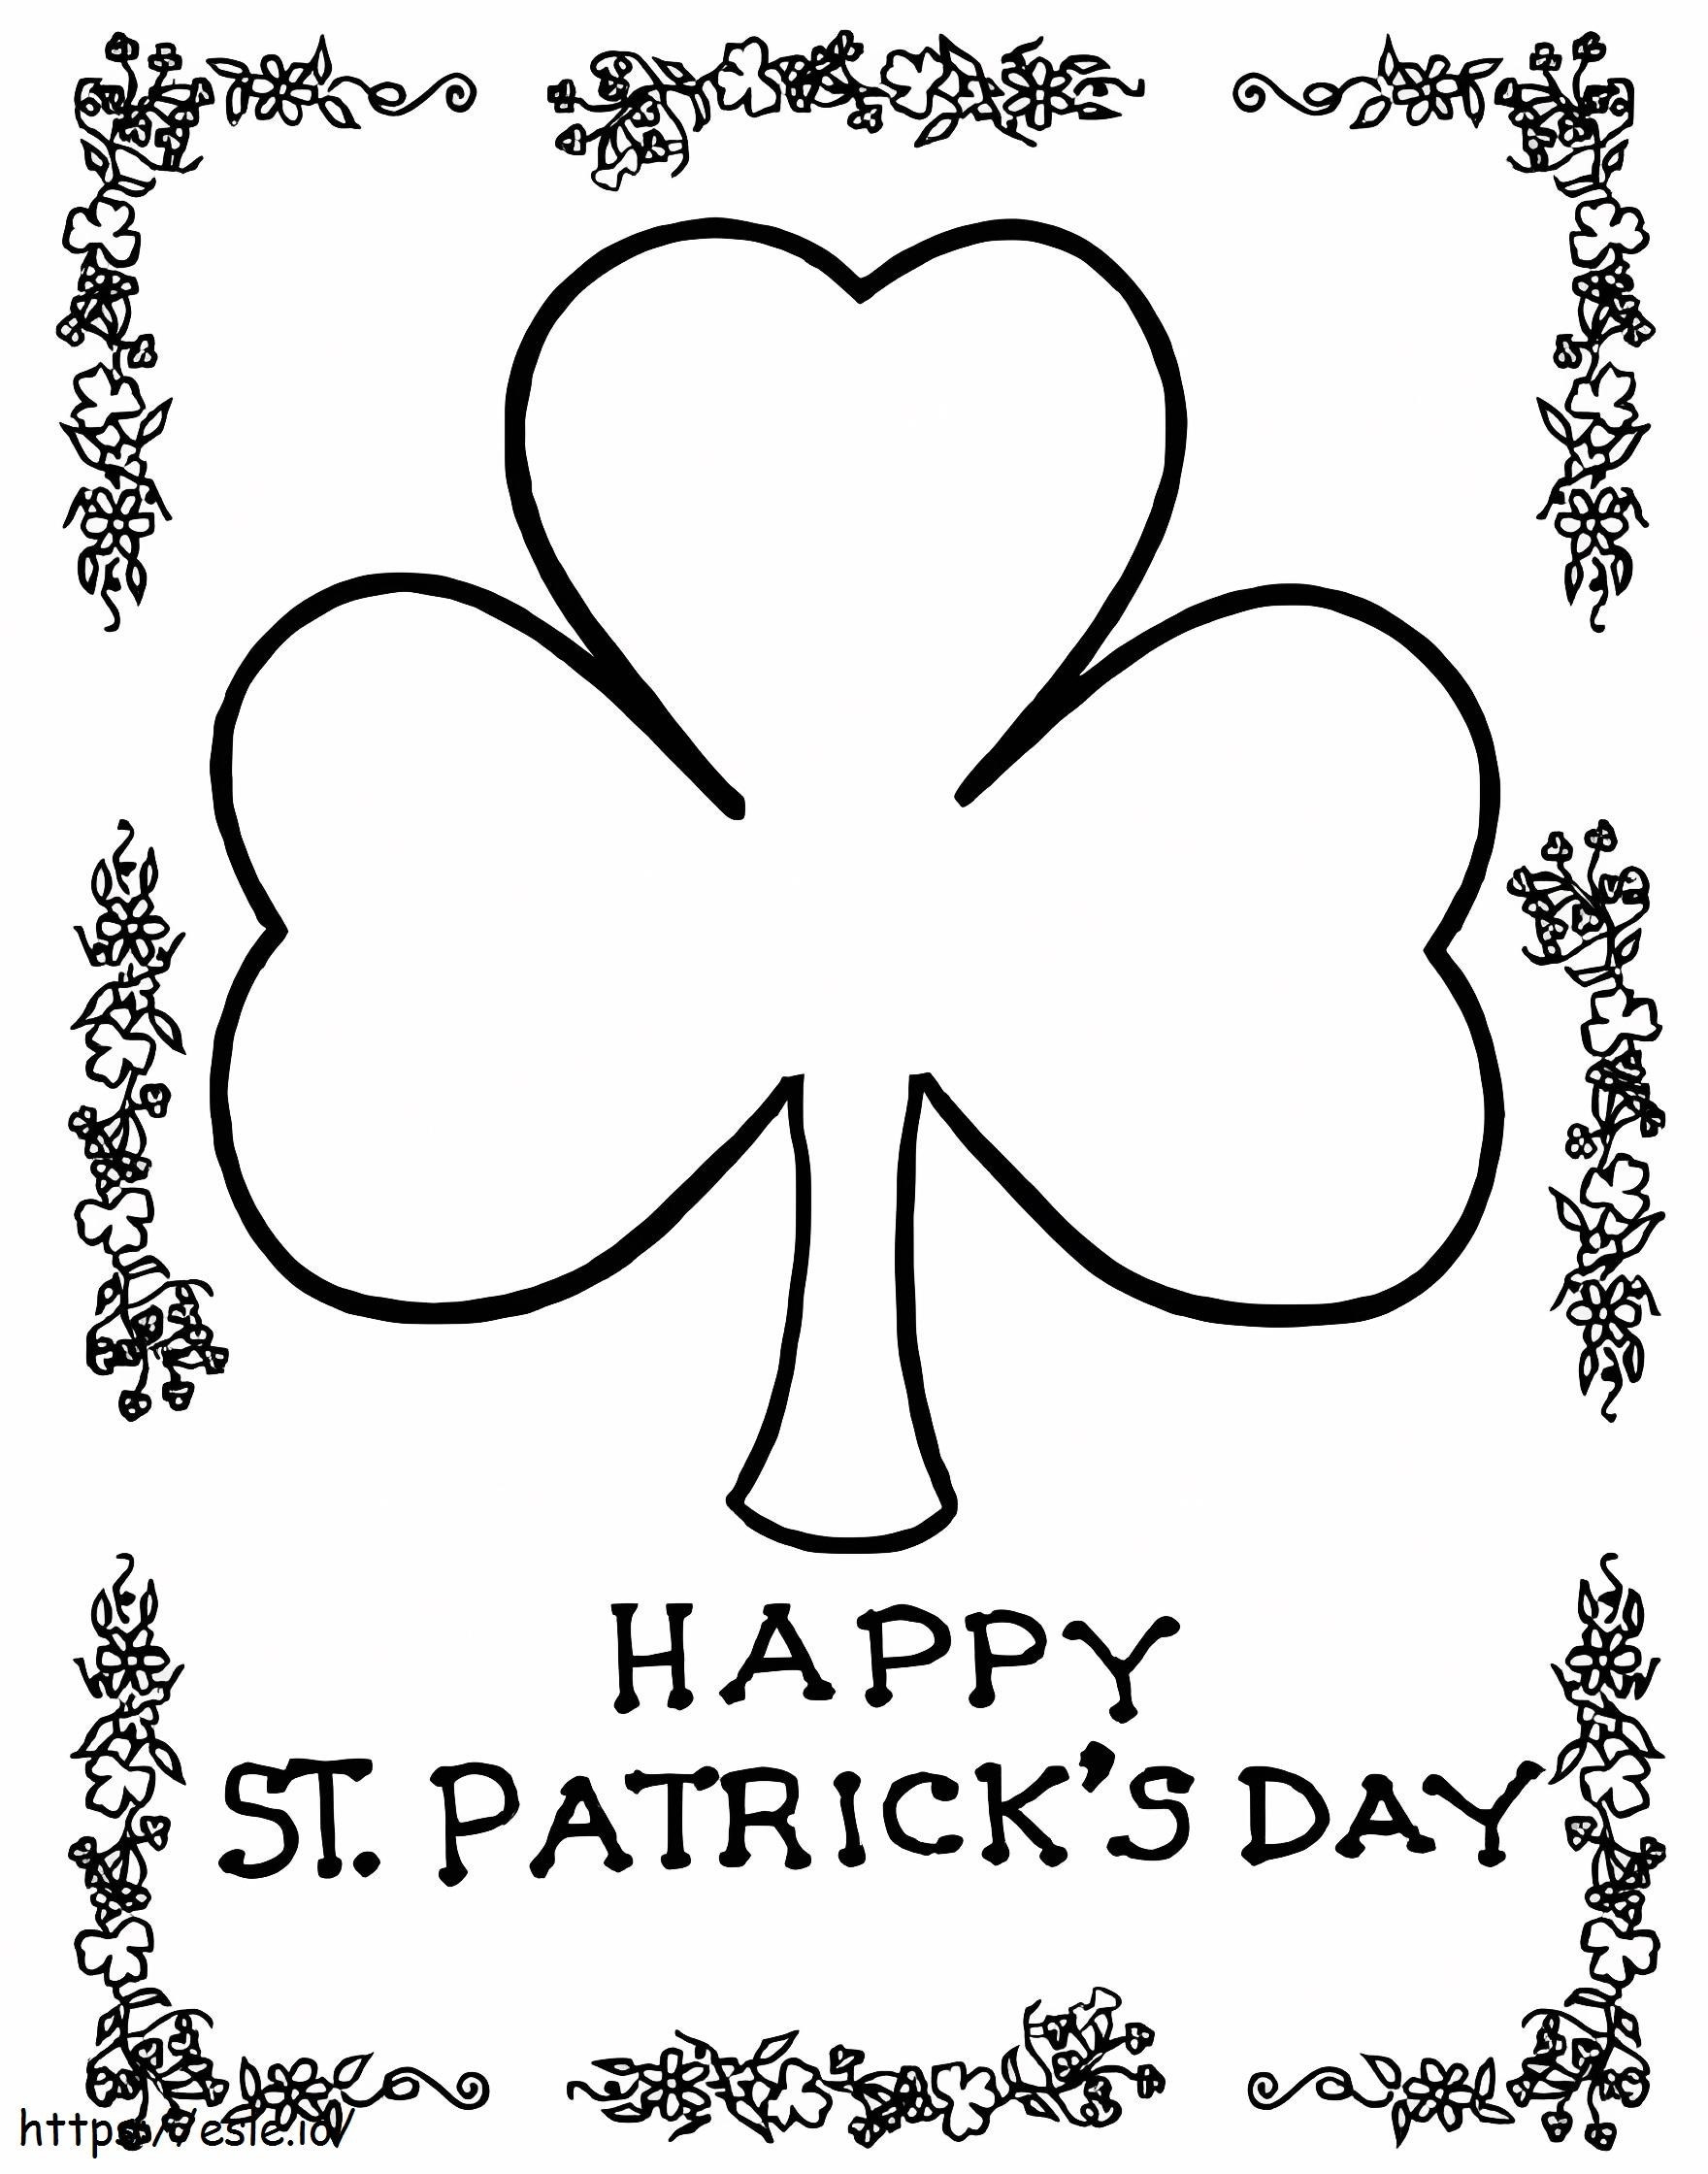 Happy St. Patricks Day Shamrock coloring page